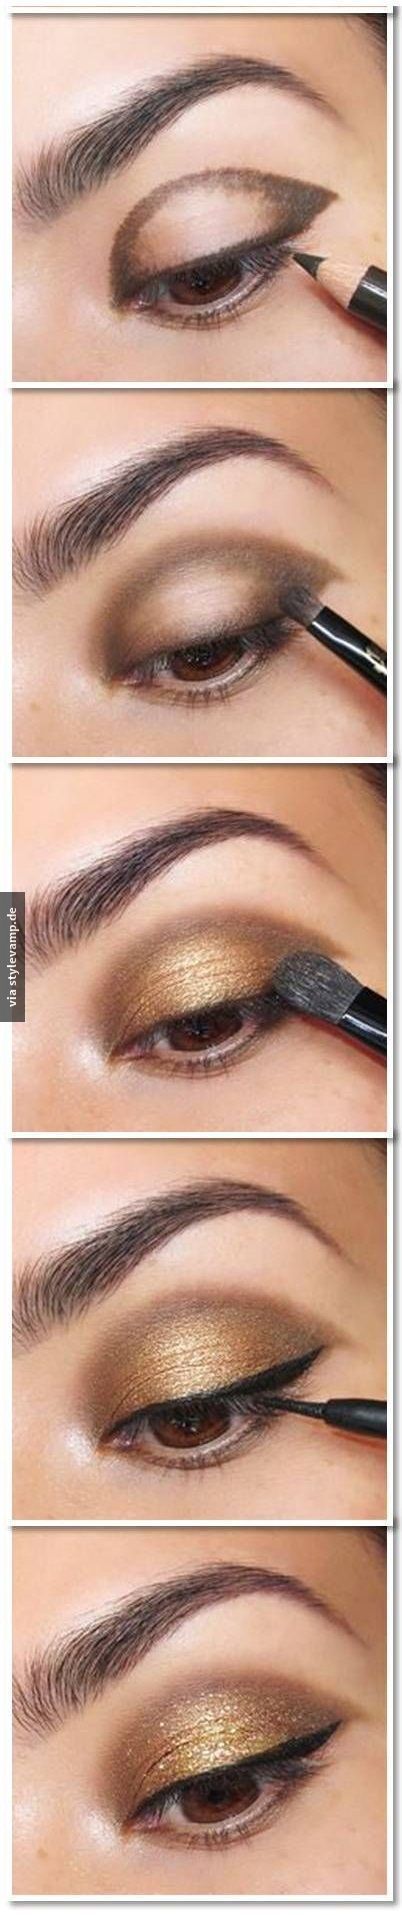 make-up.jpg